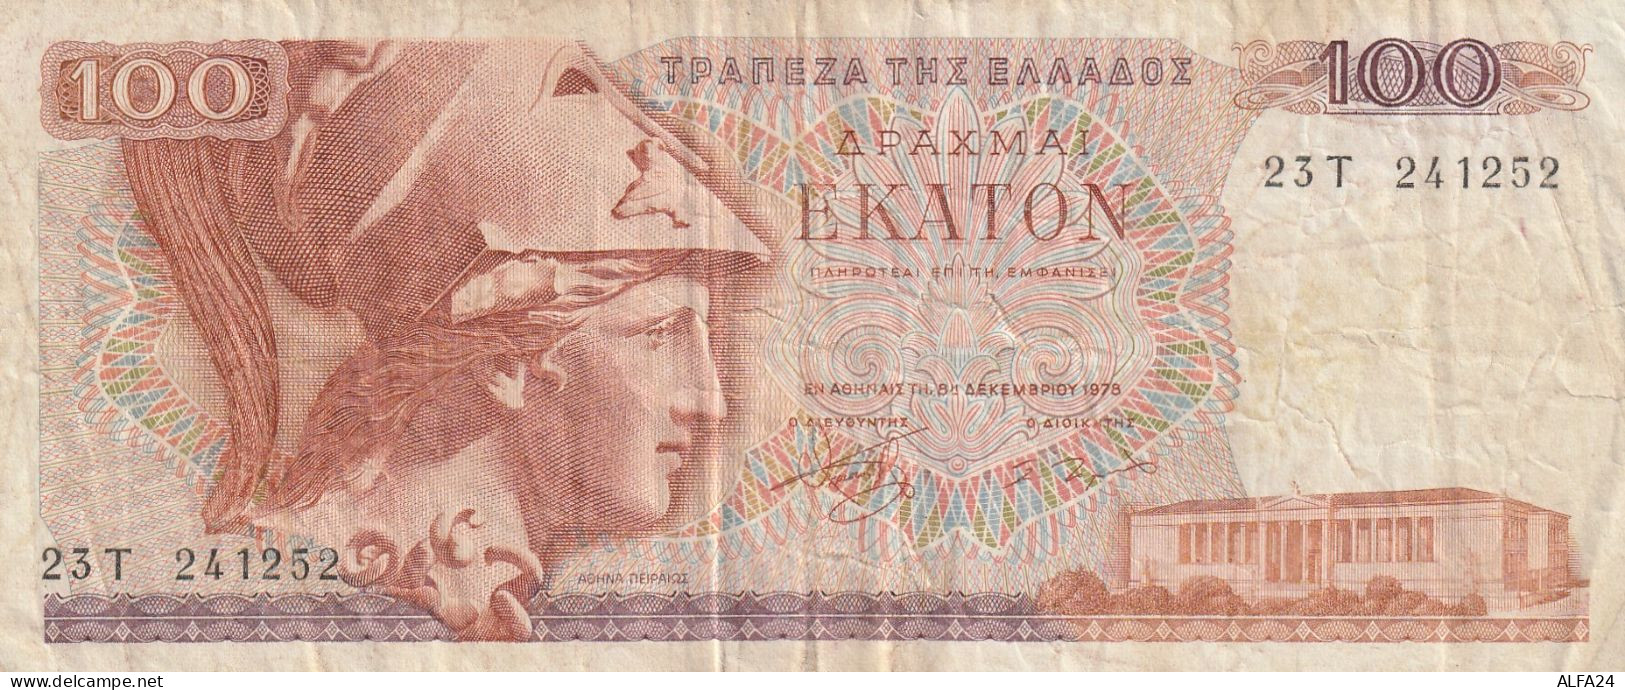 BANCONOTA GRECIA 100 VF  (B_609 - Greece